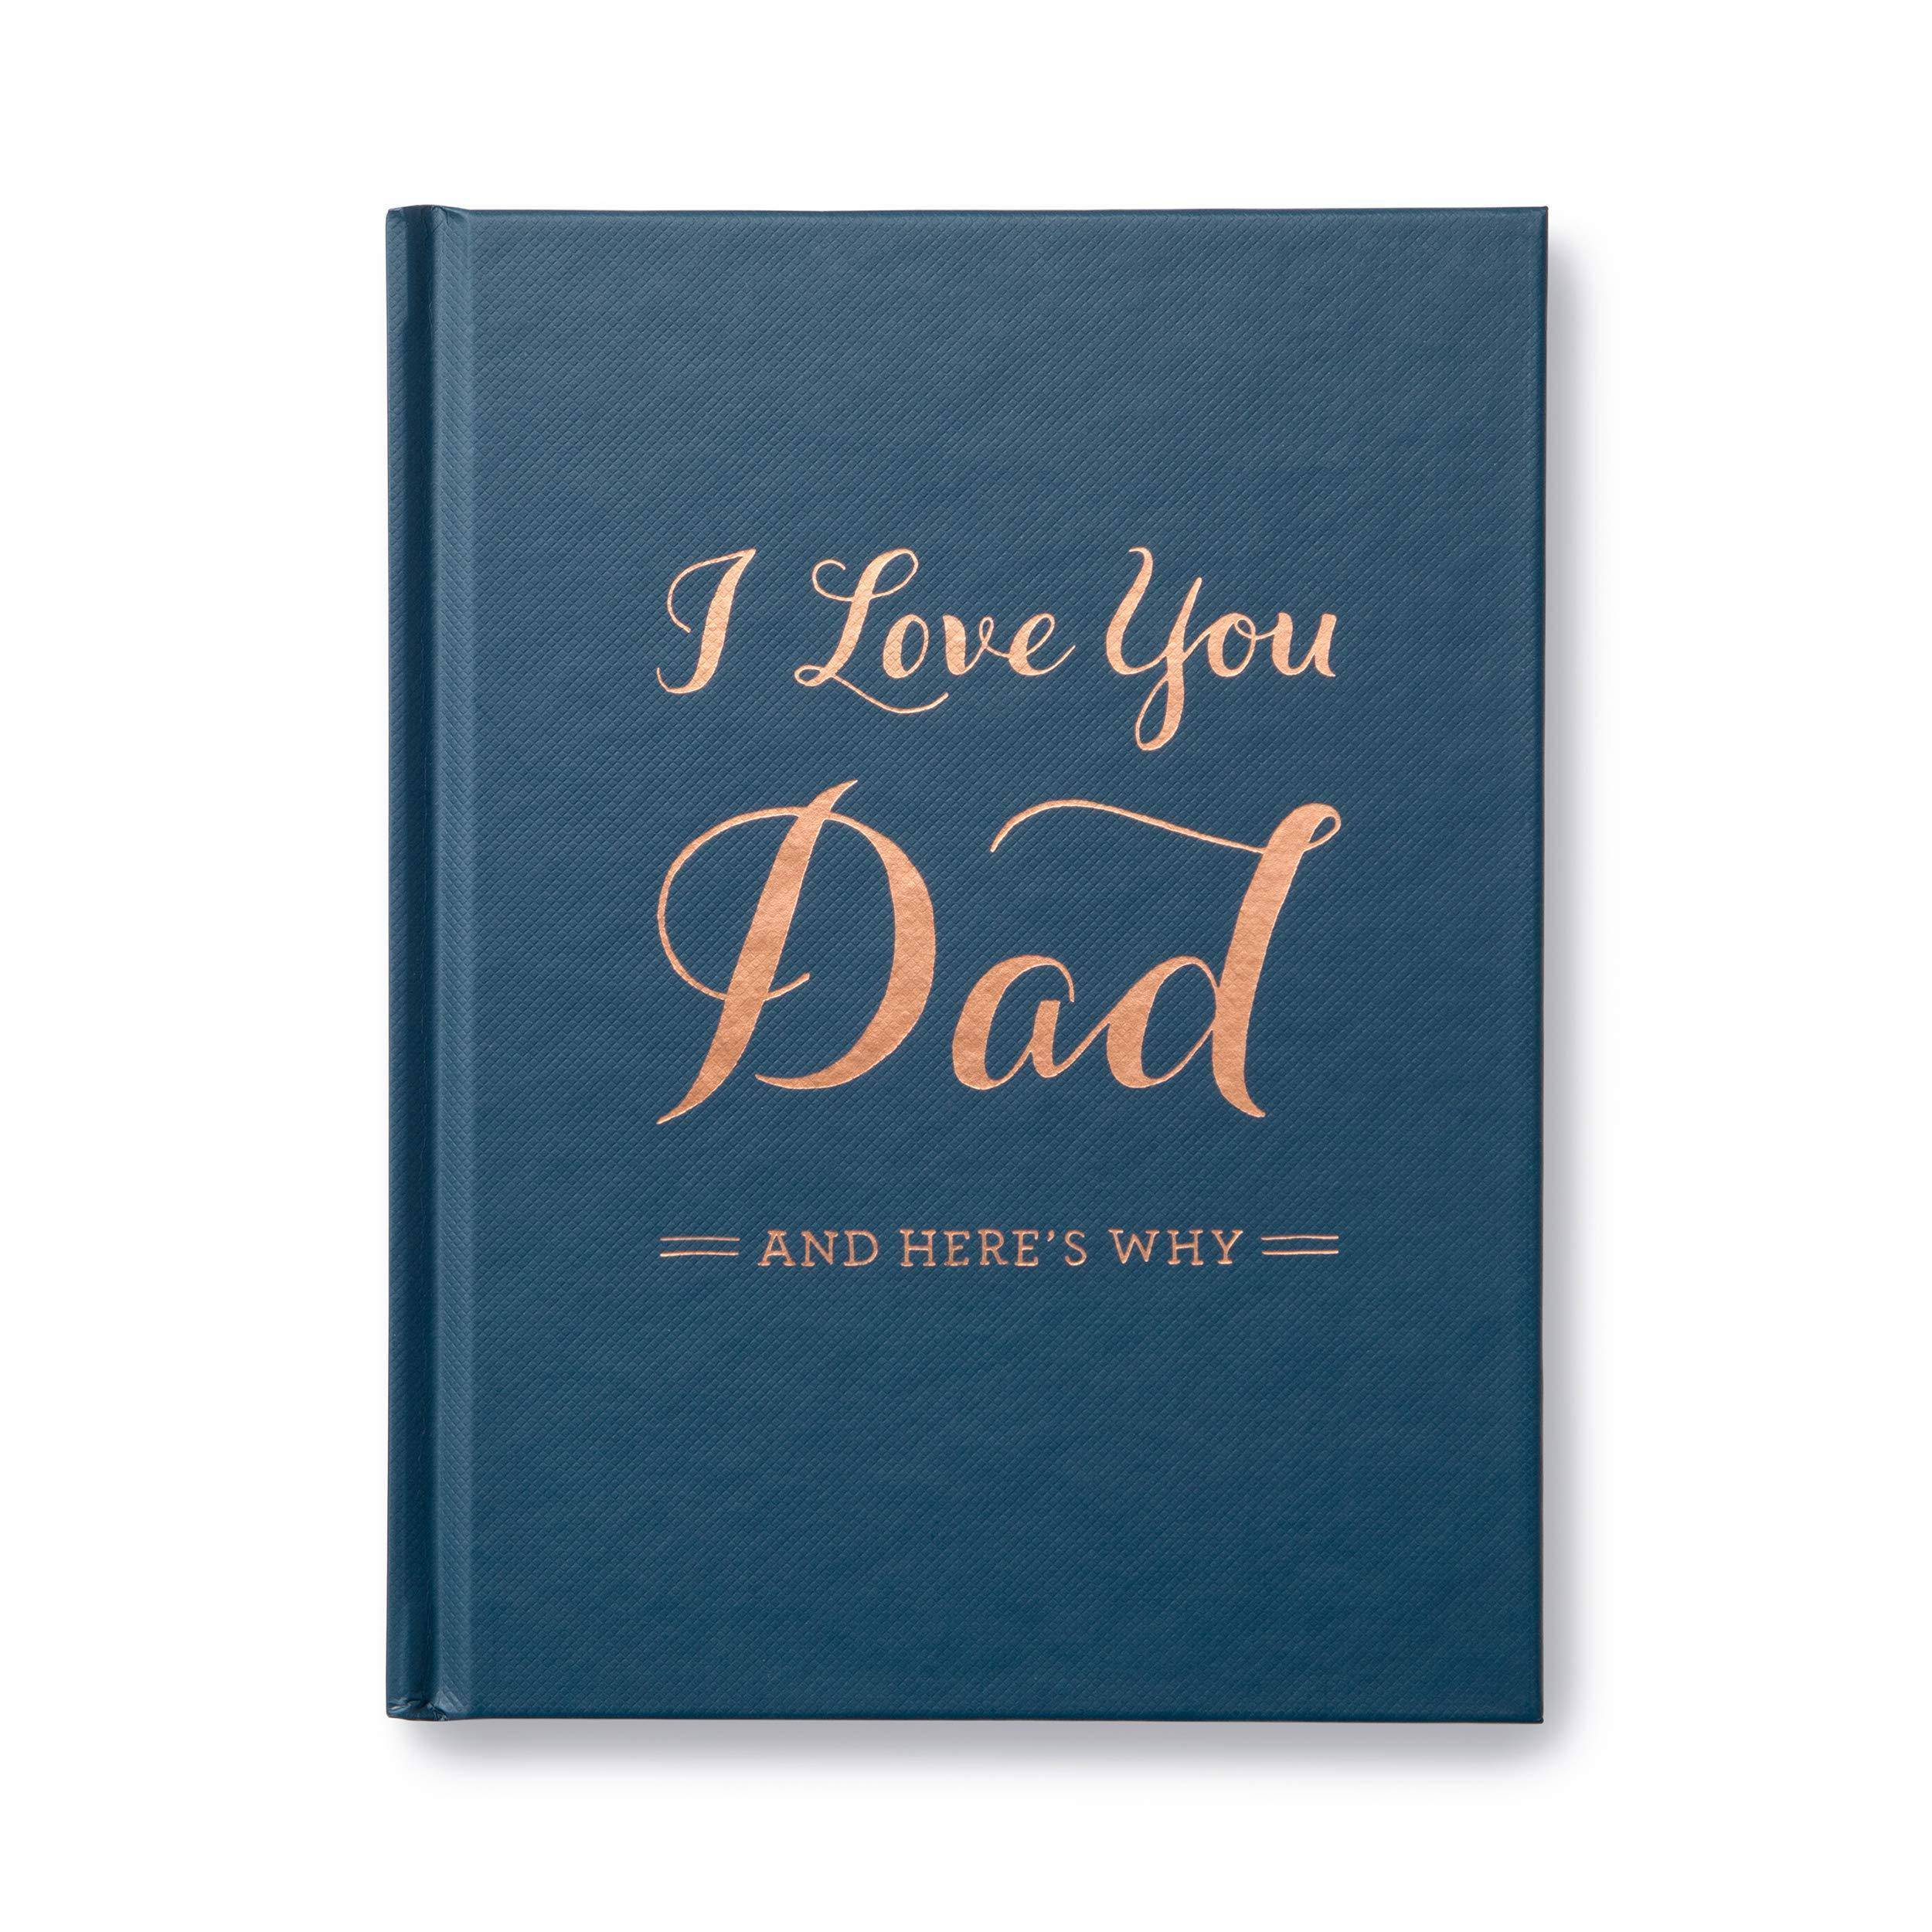 I Love You Dad - SureShot Books Publishing LLC